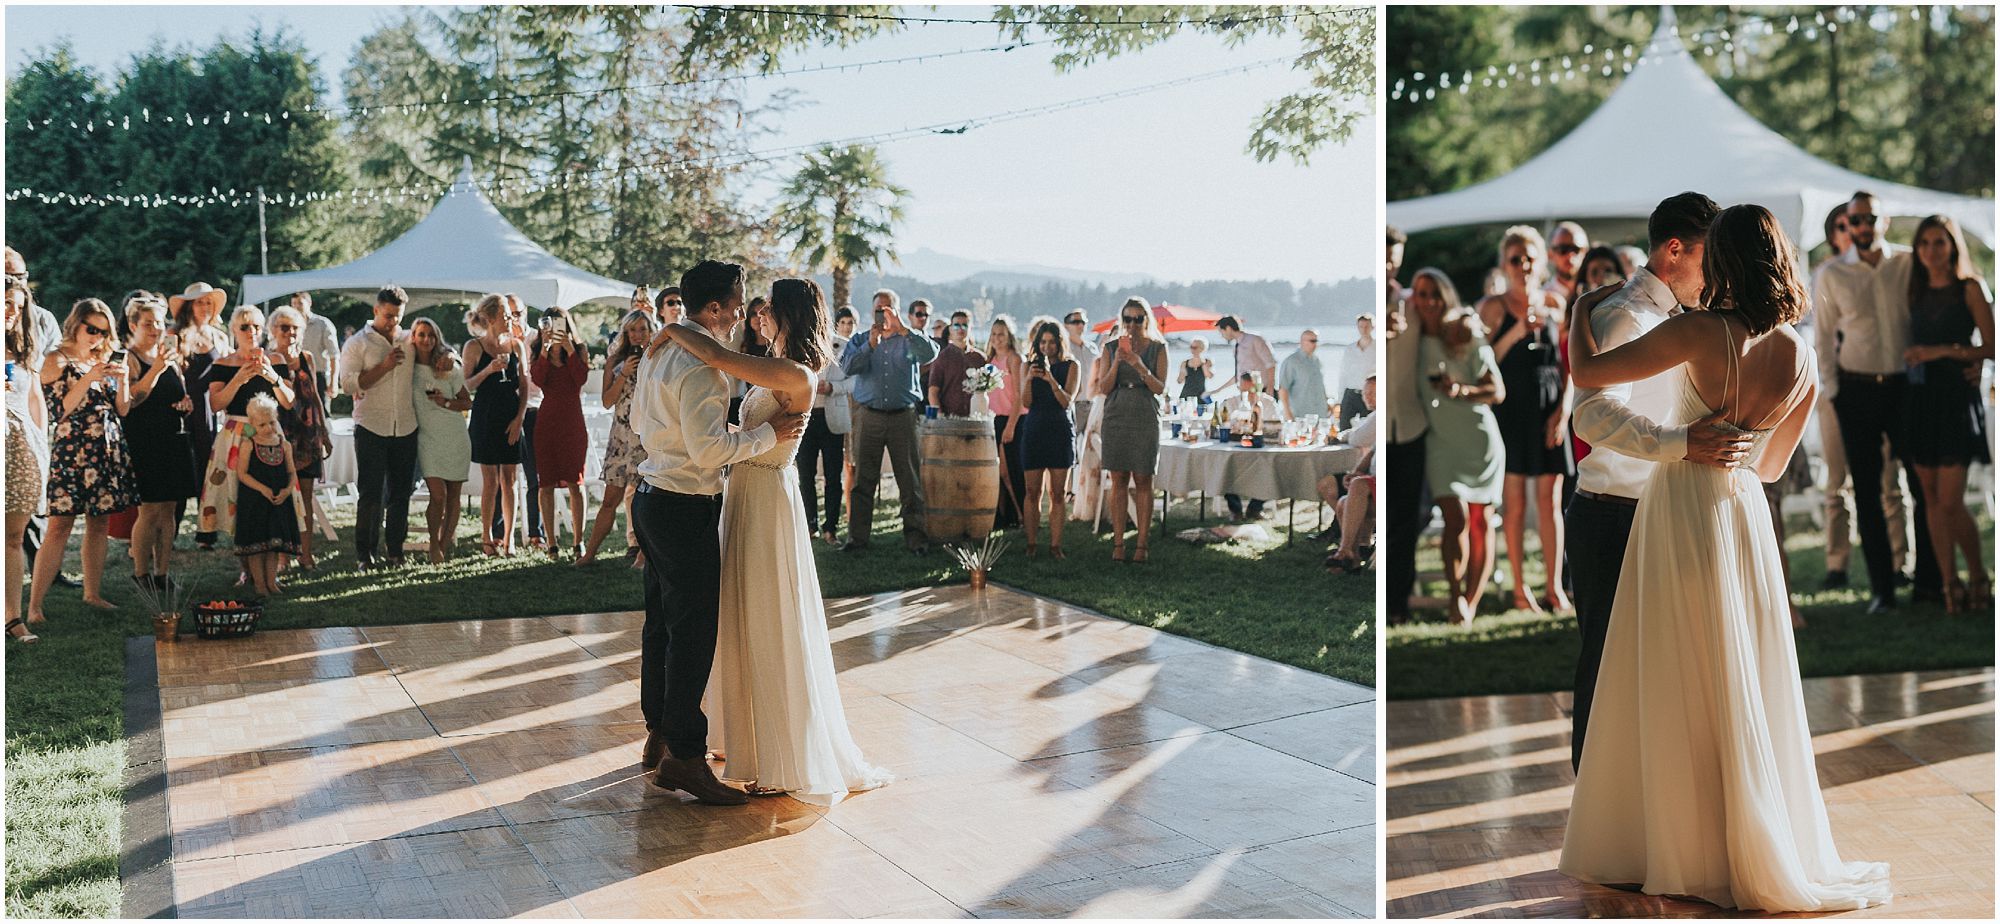 bride and groom first dance at backyard wedding